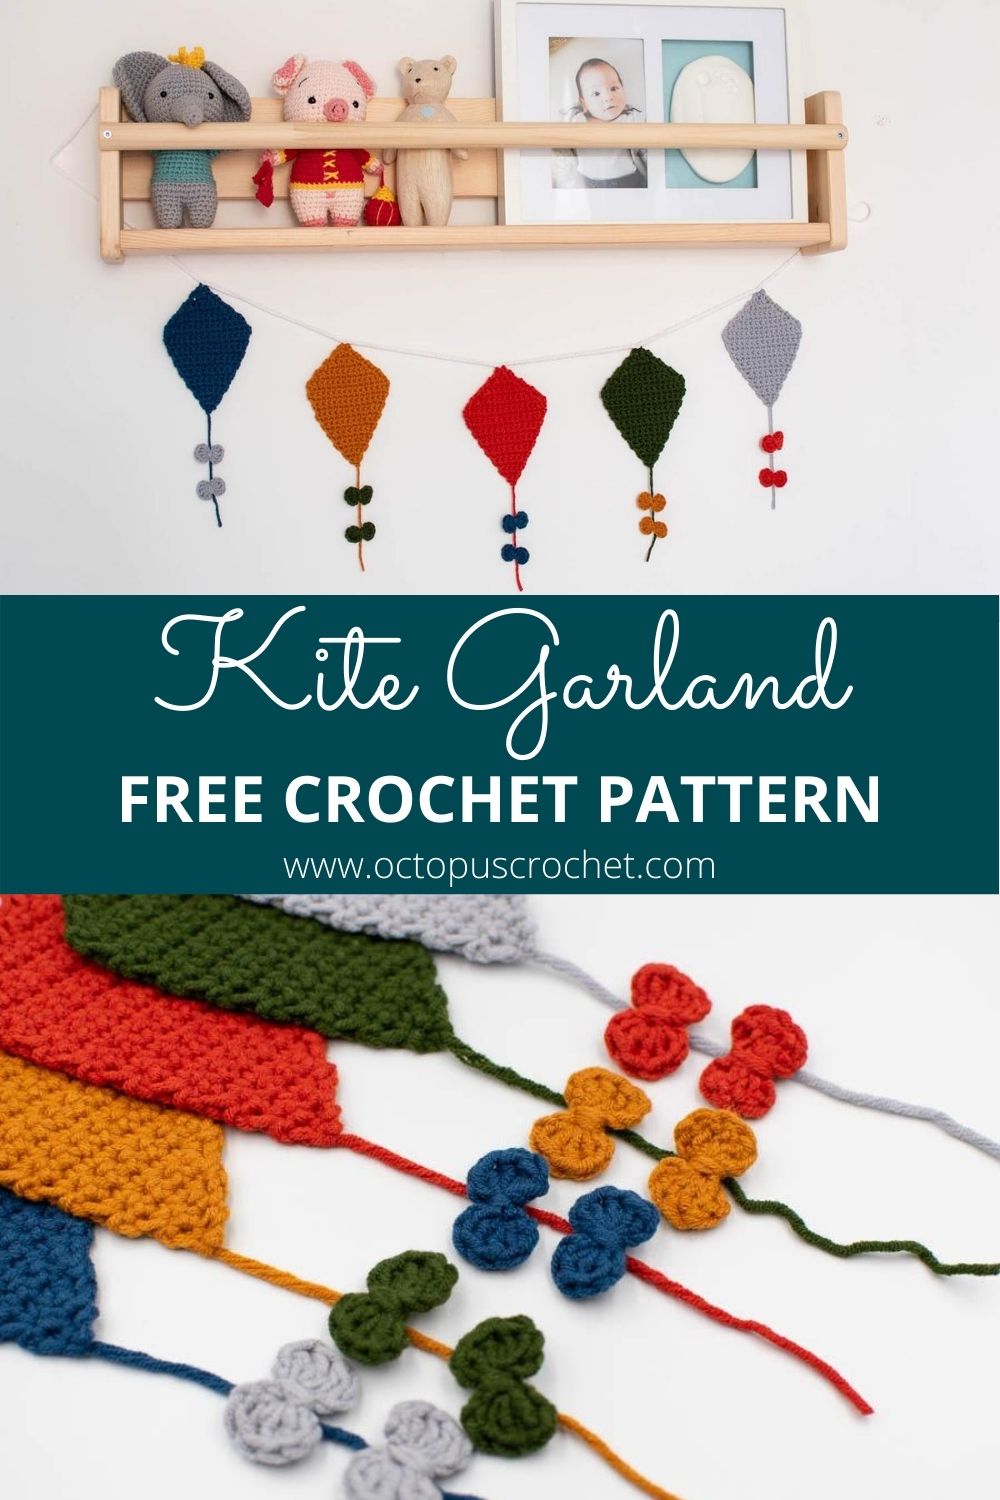 Kite garland free crochet pattern